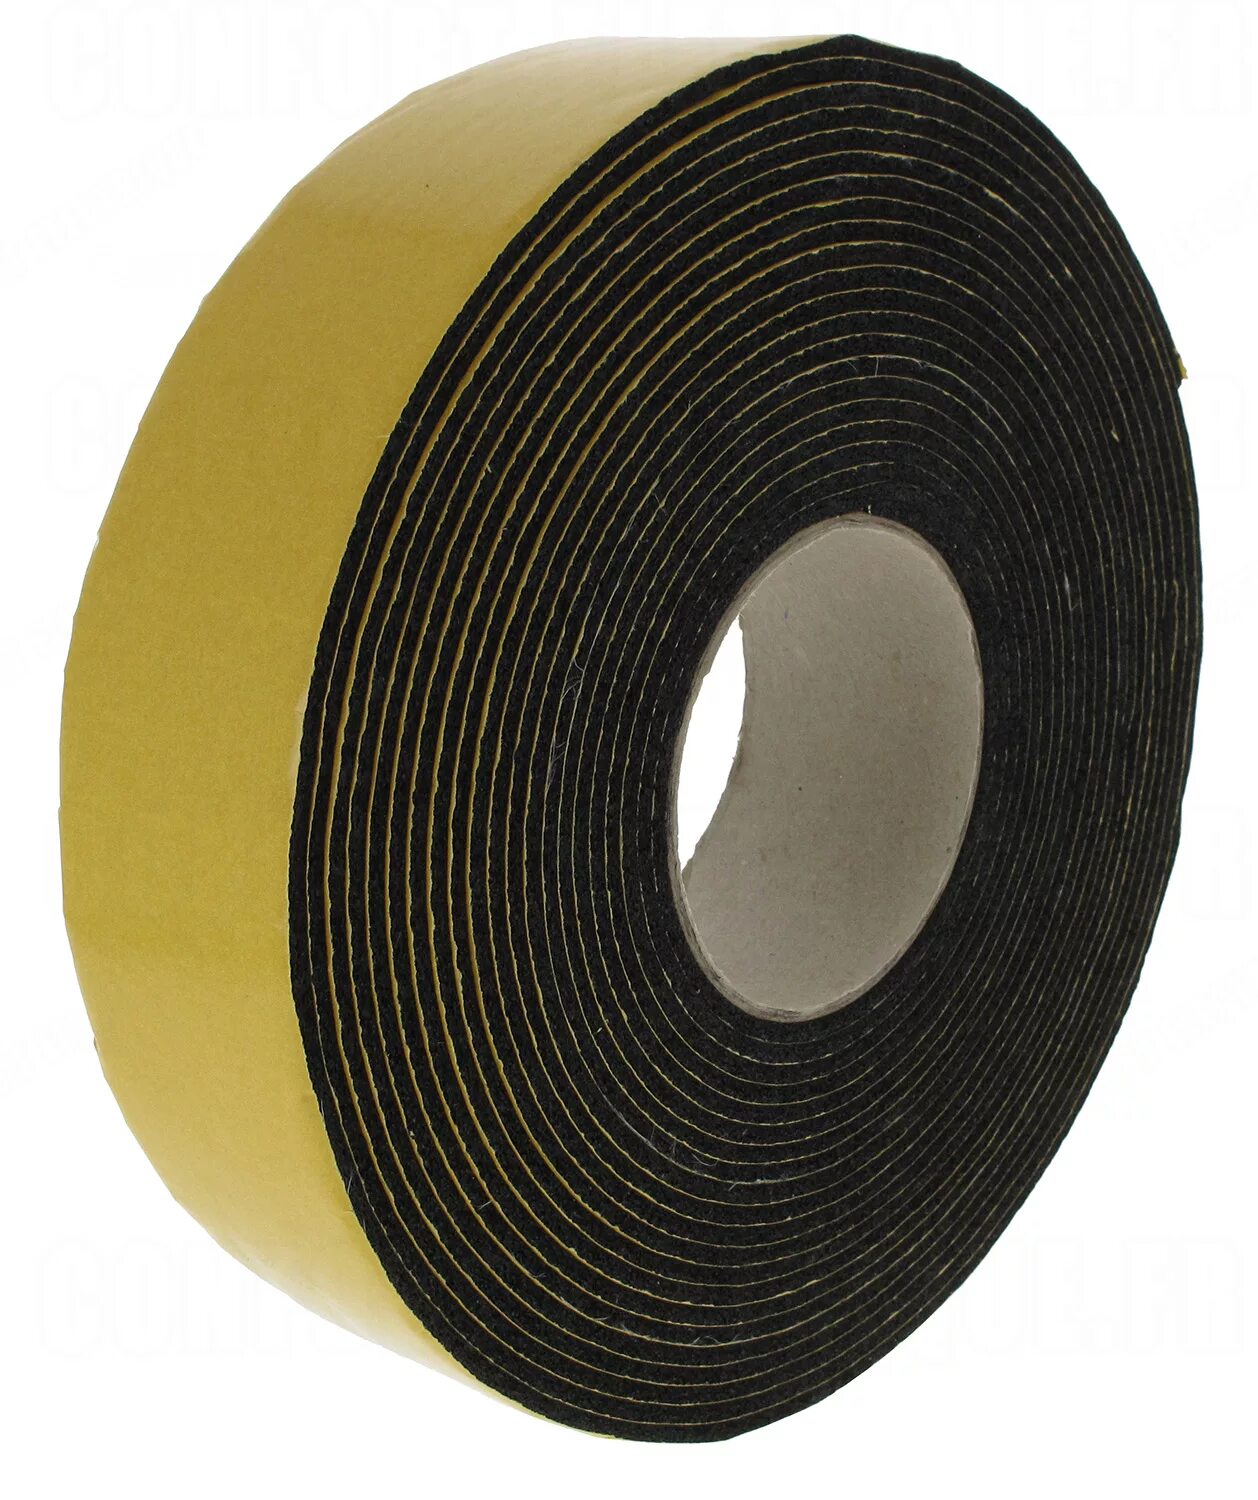 Купить теплую ленту. Лента Adhesive Tape 3 50 15. Изолента кафлекс 50 мм. Joint Insulation Tape (рулон = 50 метр). Лента самоклеющаяся Armaflex Tape.